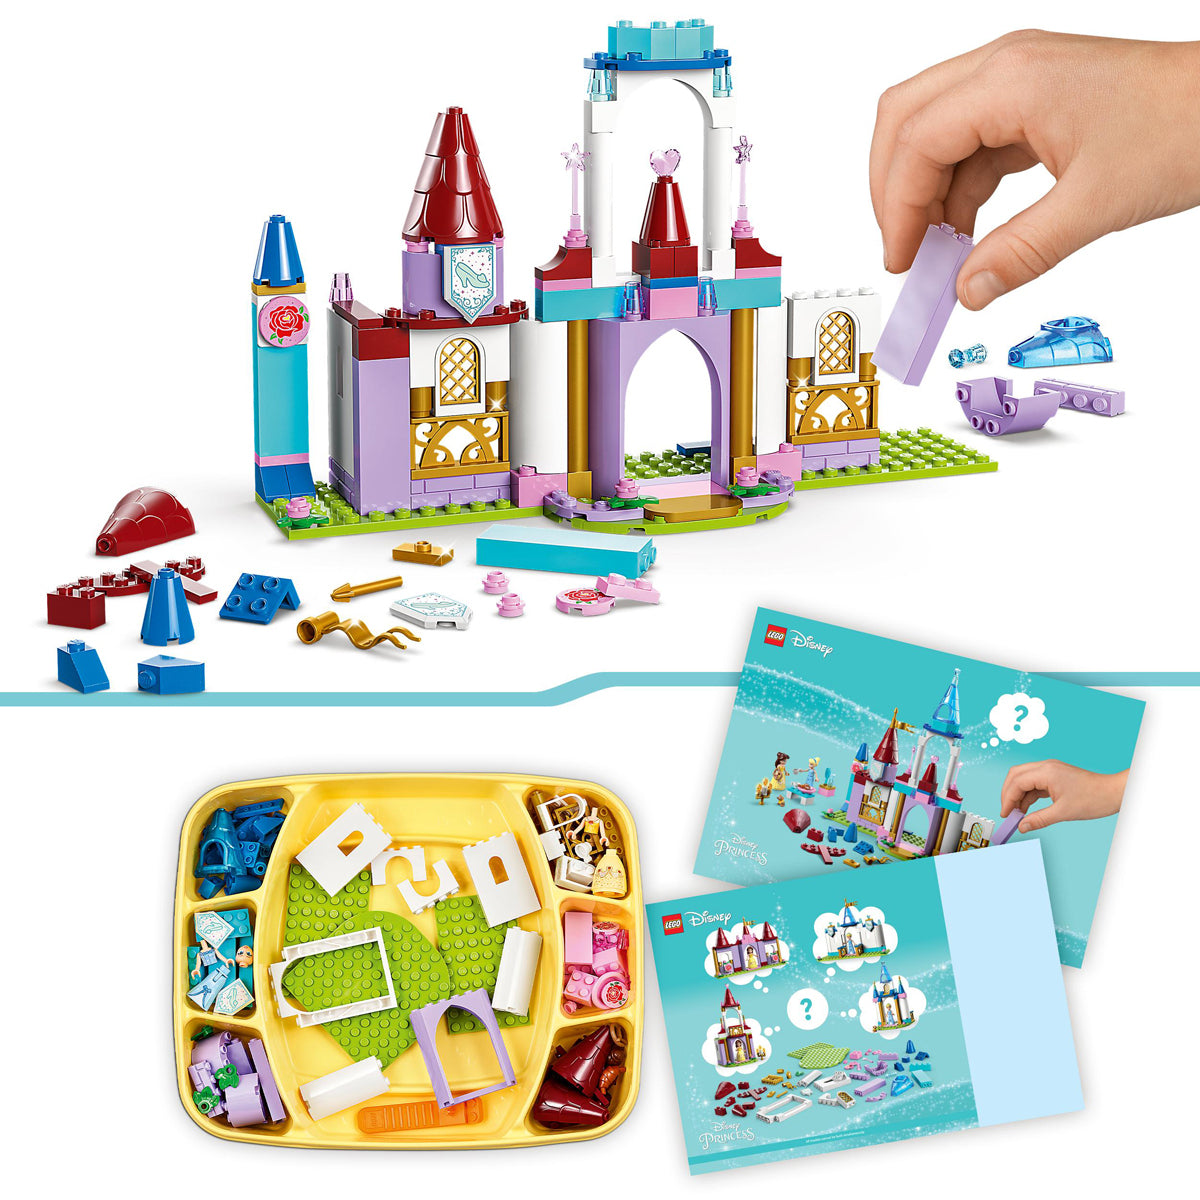 LEGO Disney Princess - Creative Castles 43219